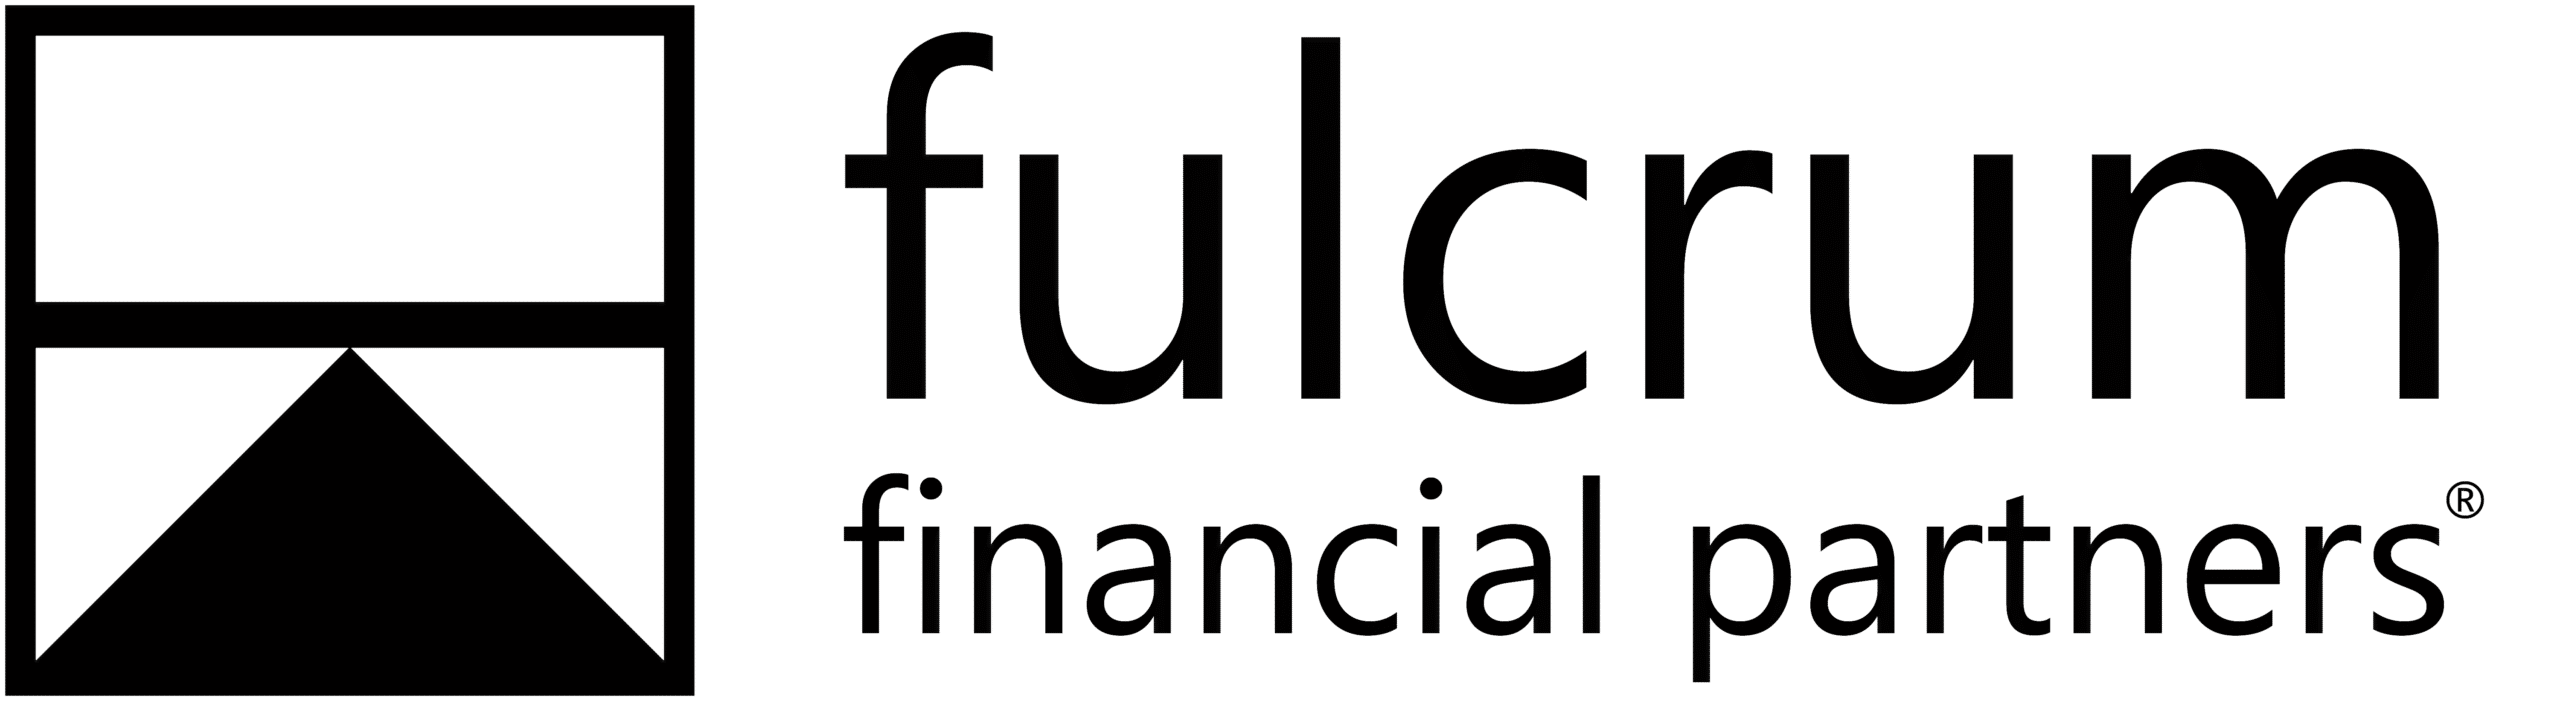 Fulcrum Financial Partners logo